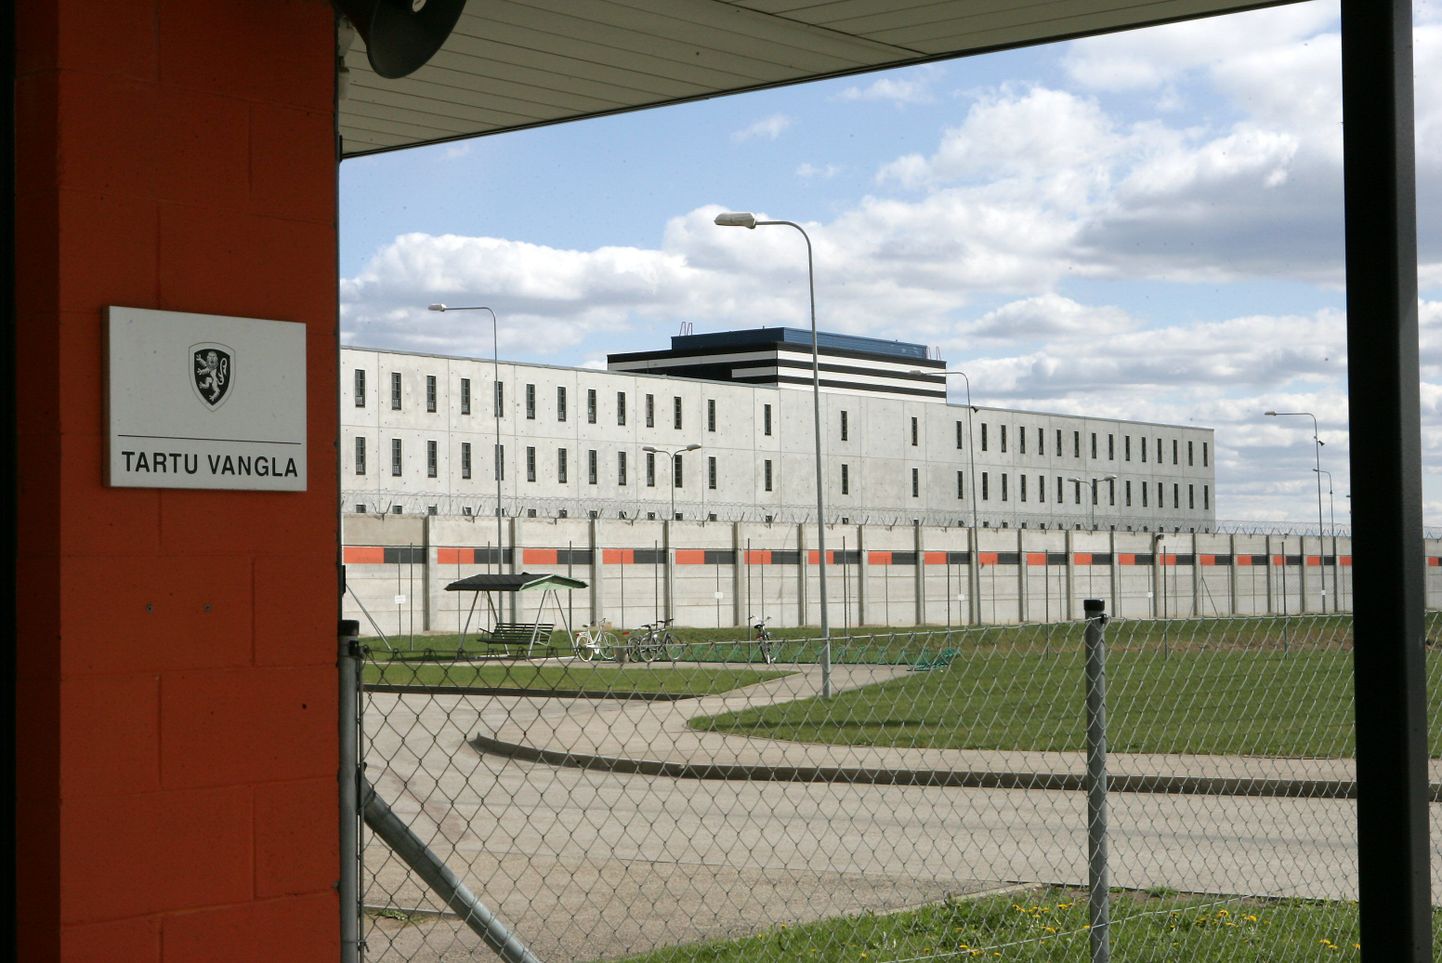 Tartu vangla